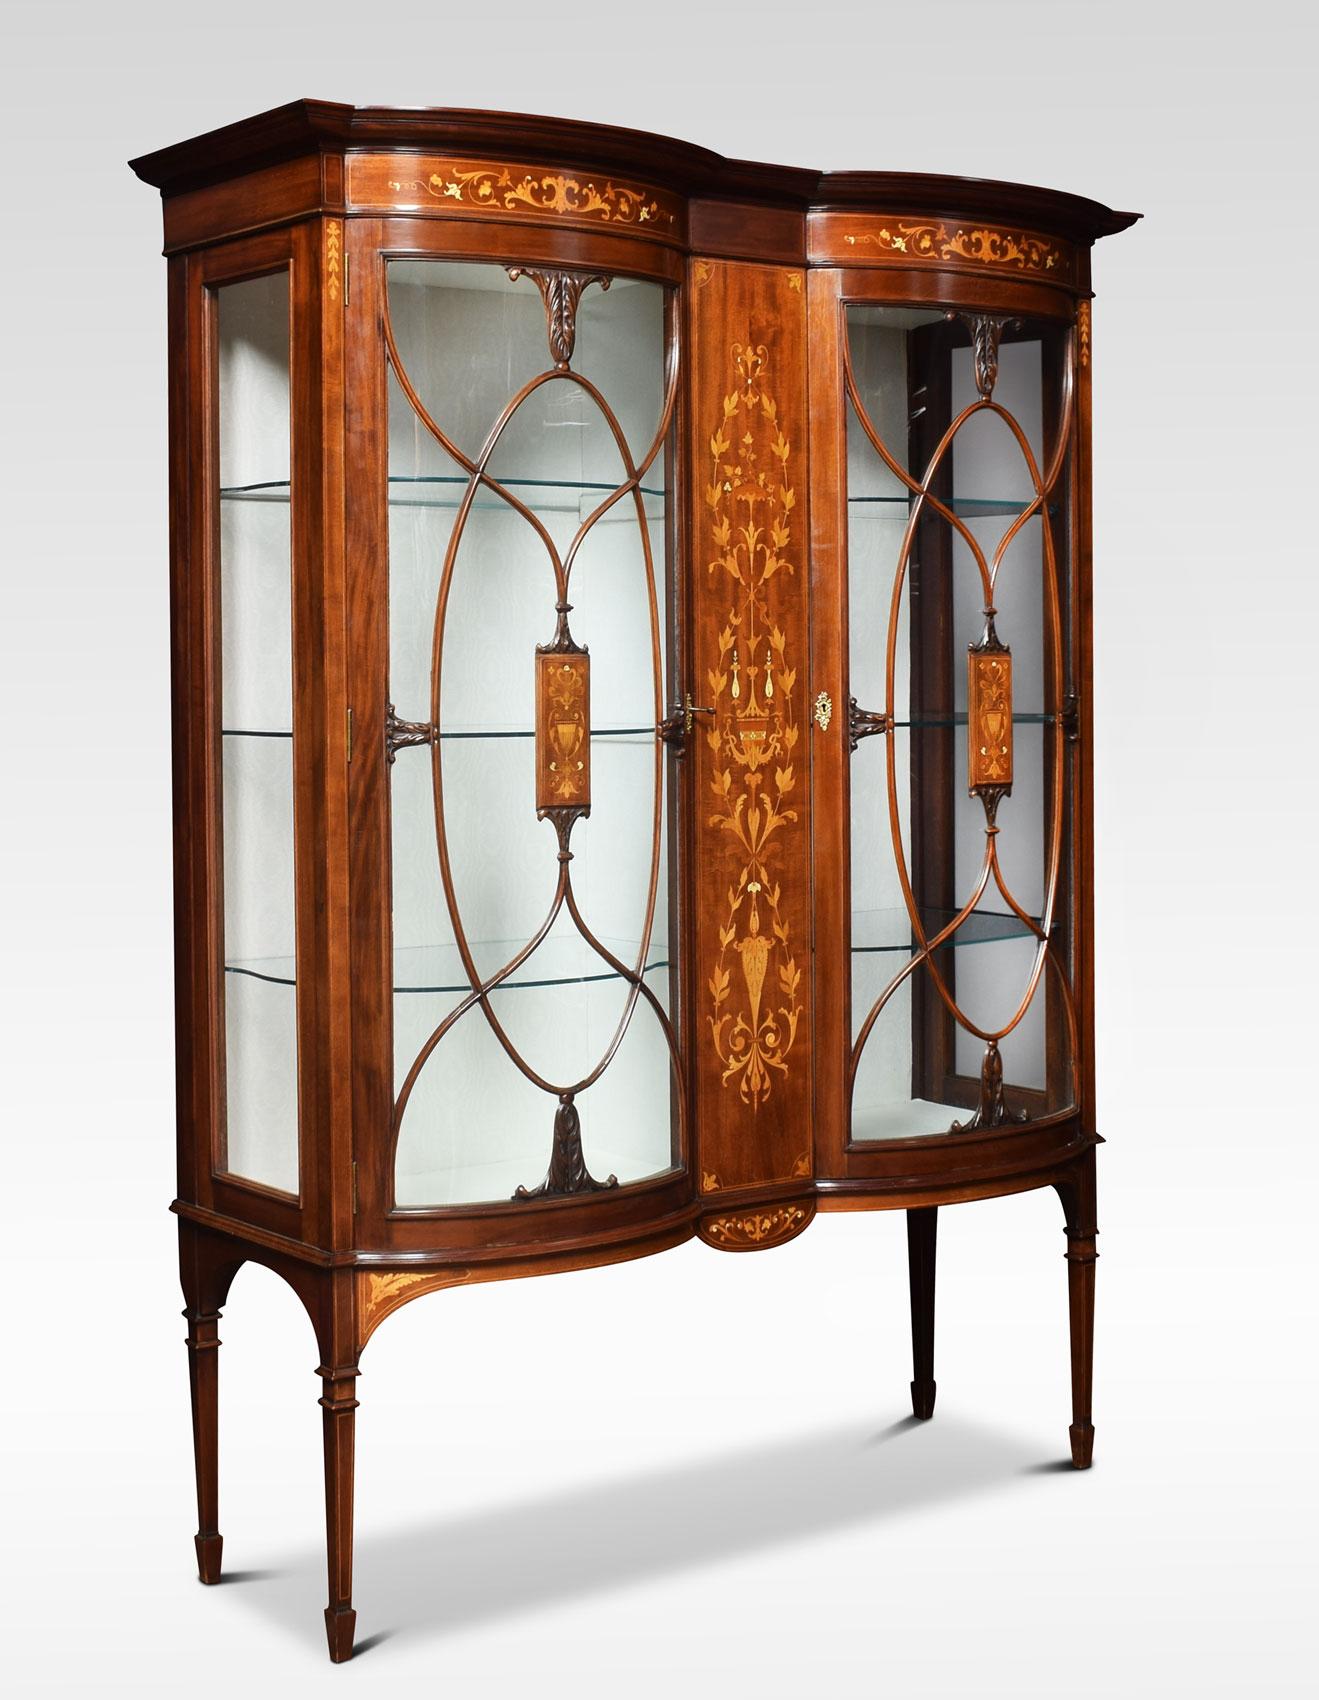 British Mahogany and Marquetry Inlaid Display Cabinets